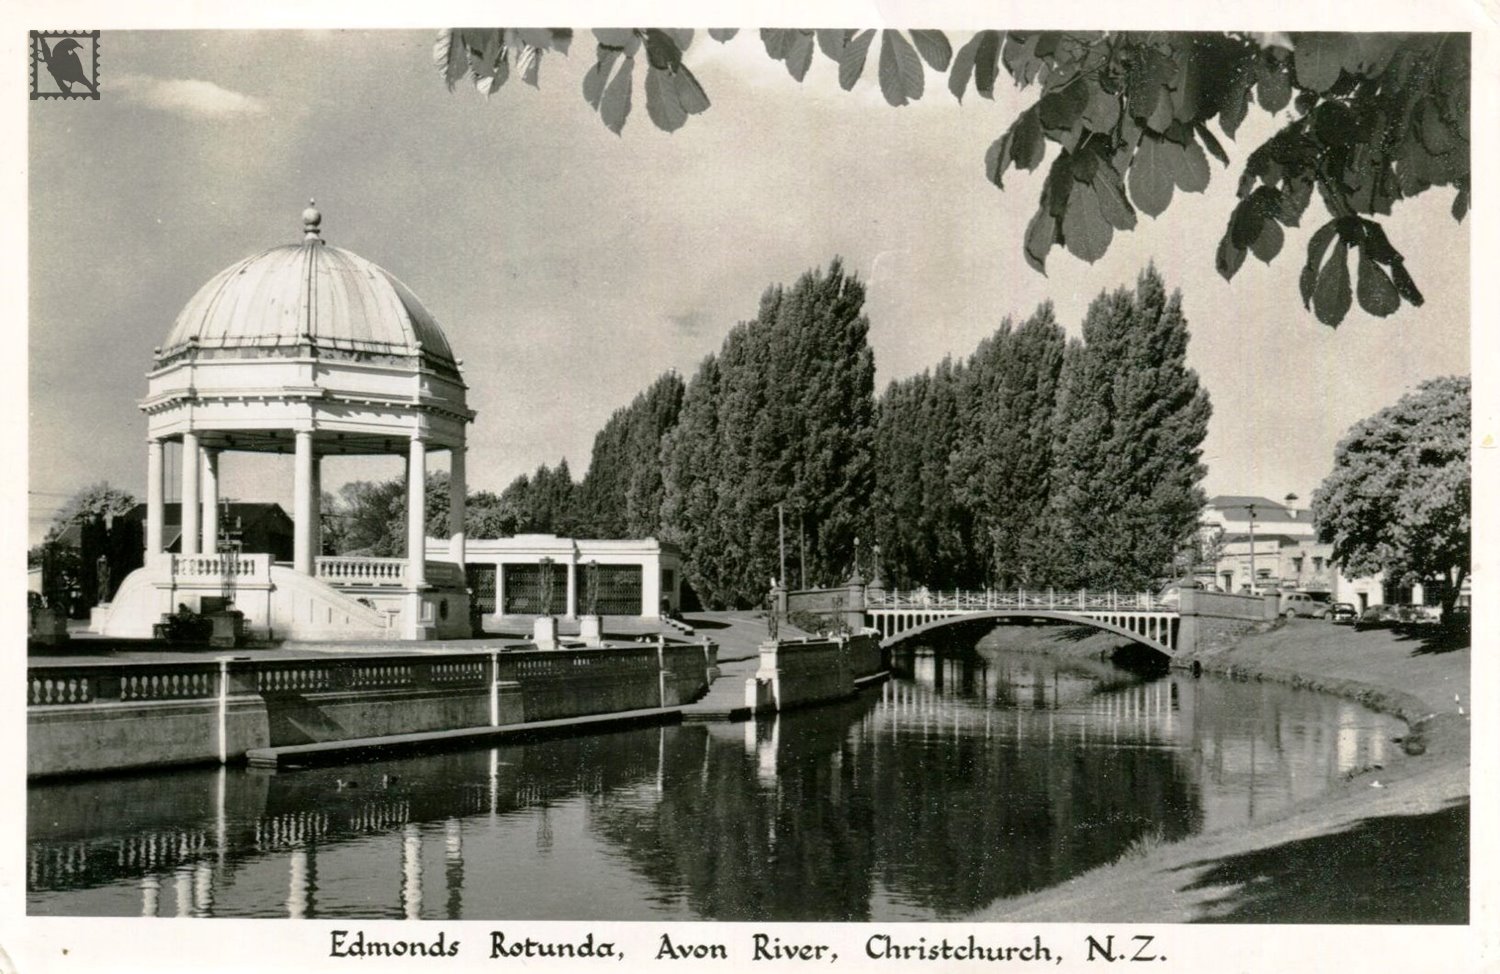 Christchurch The Edmonds Rotunda